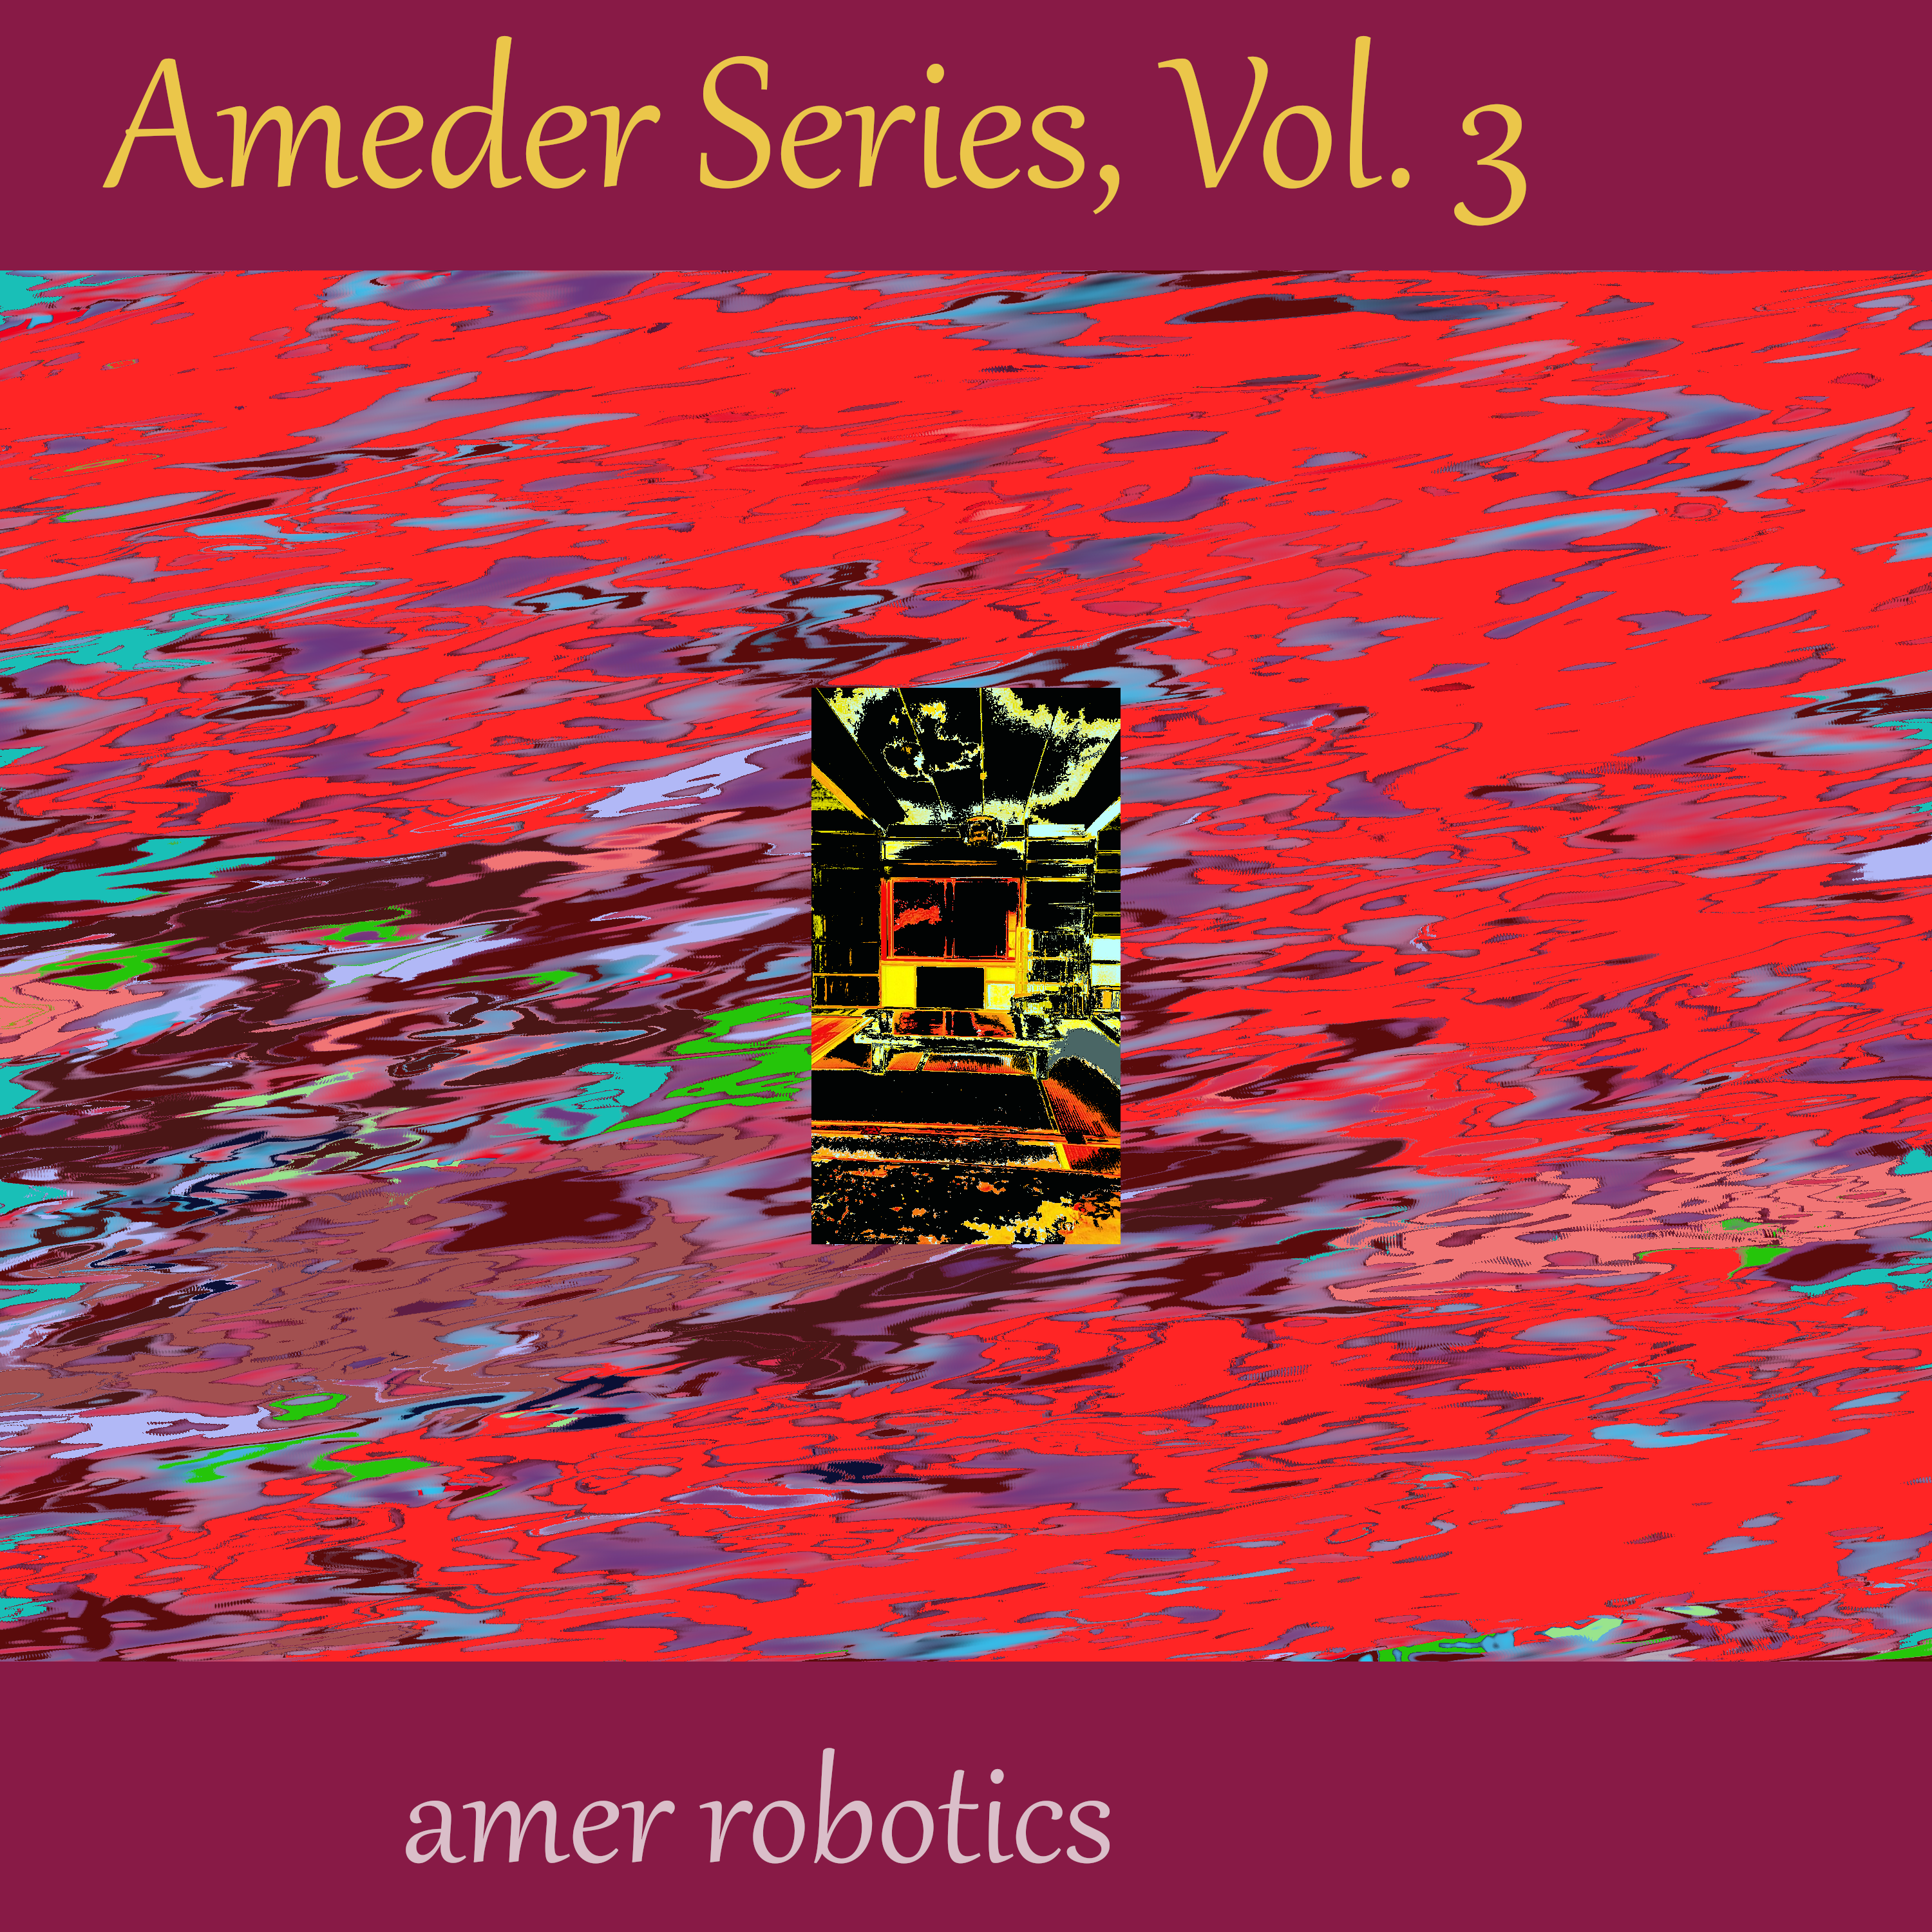 Ameder Series, Vol. 3 Jacket Art